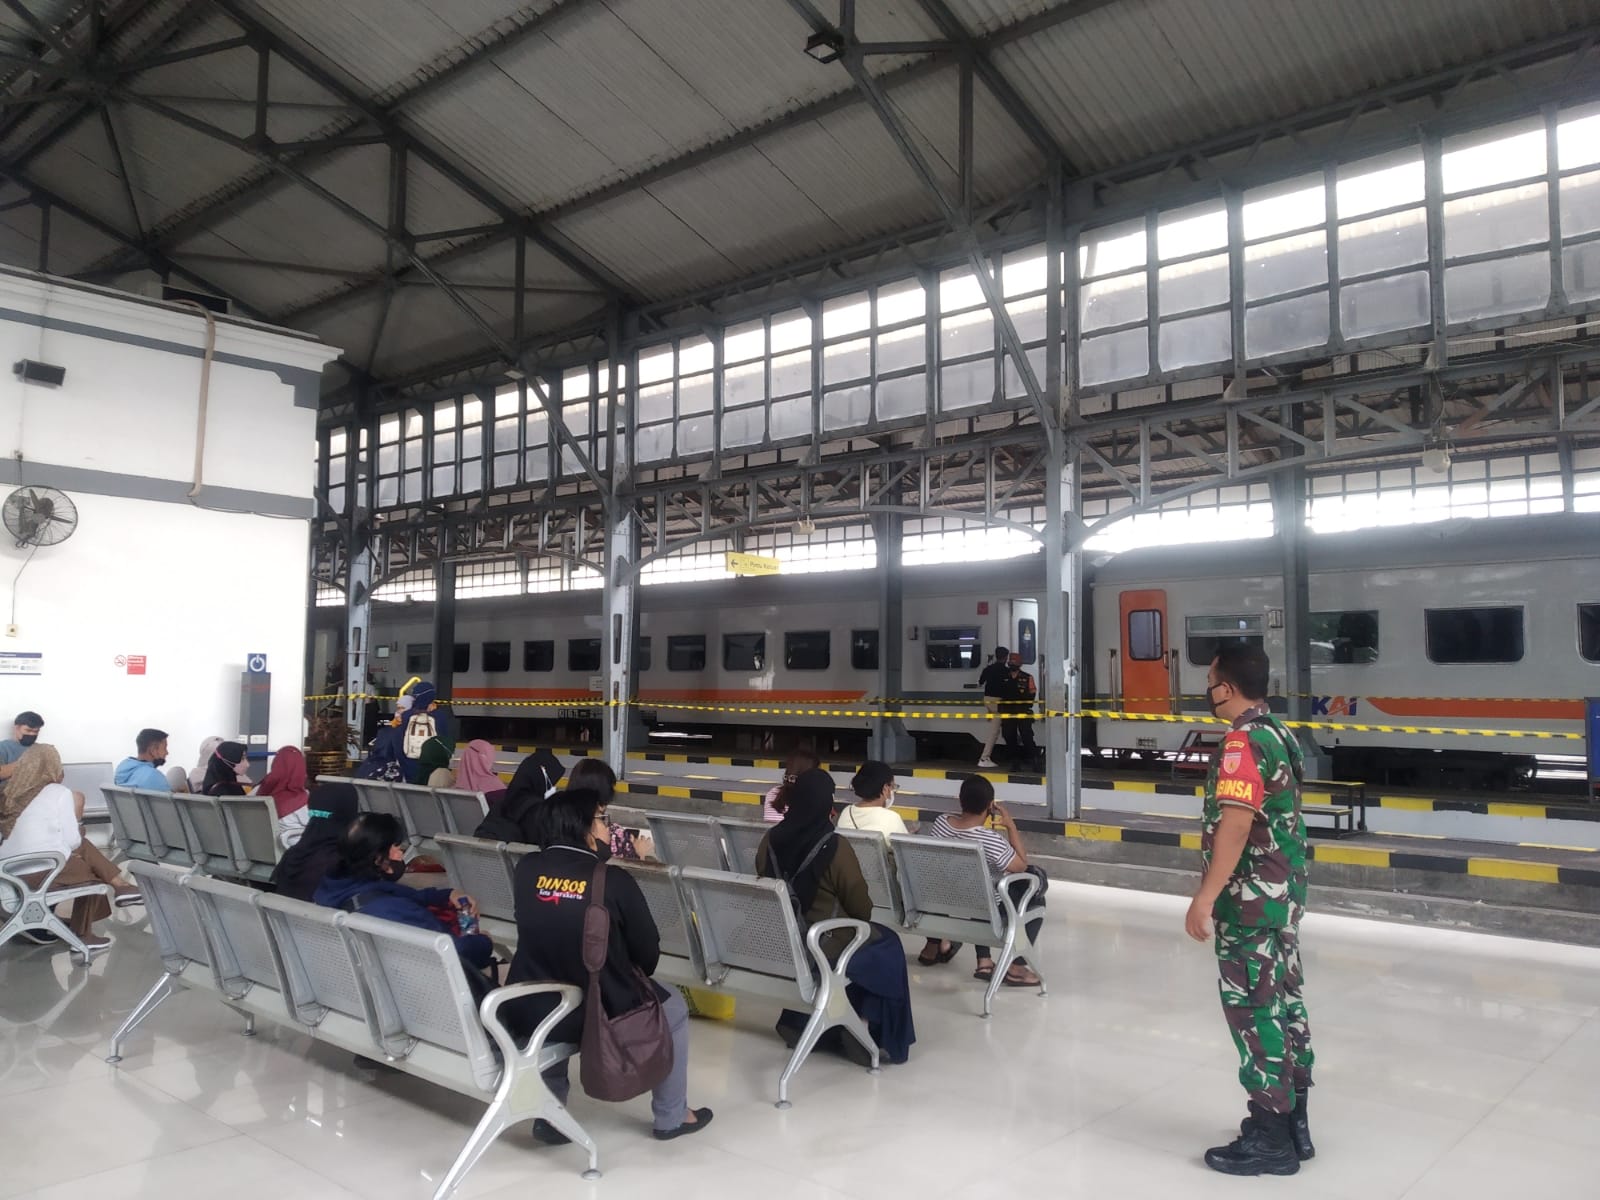 Babinsa Purwosari Dan Petugas Stasiun Berikan Himbauan Prokes Kepada Penumpang di Stasiun Purwosari